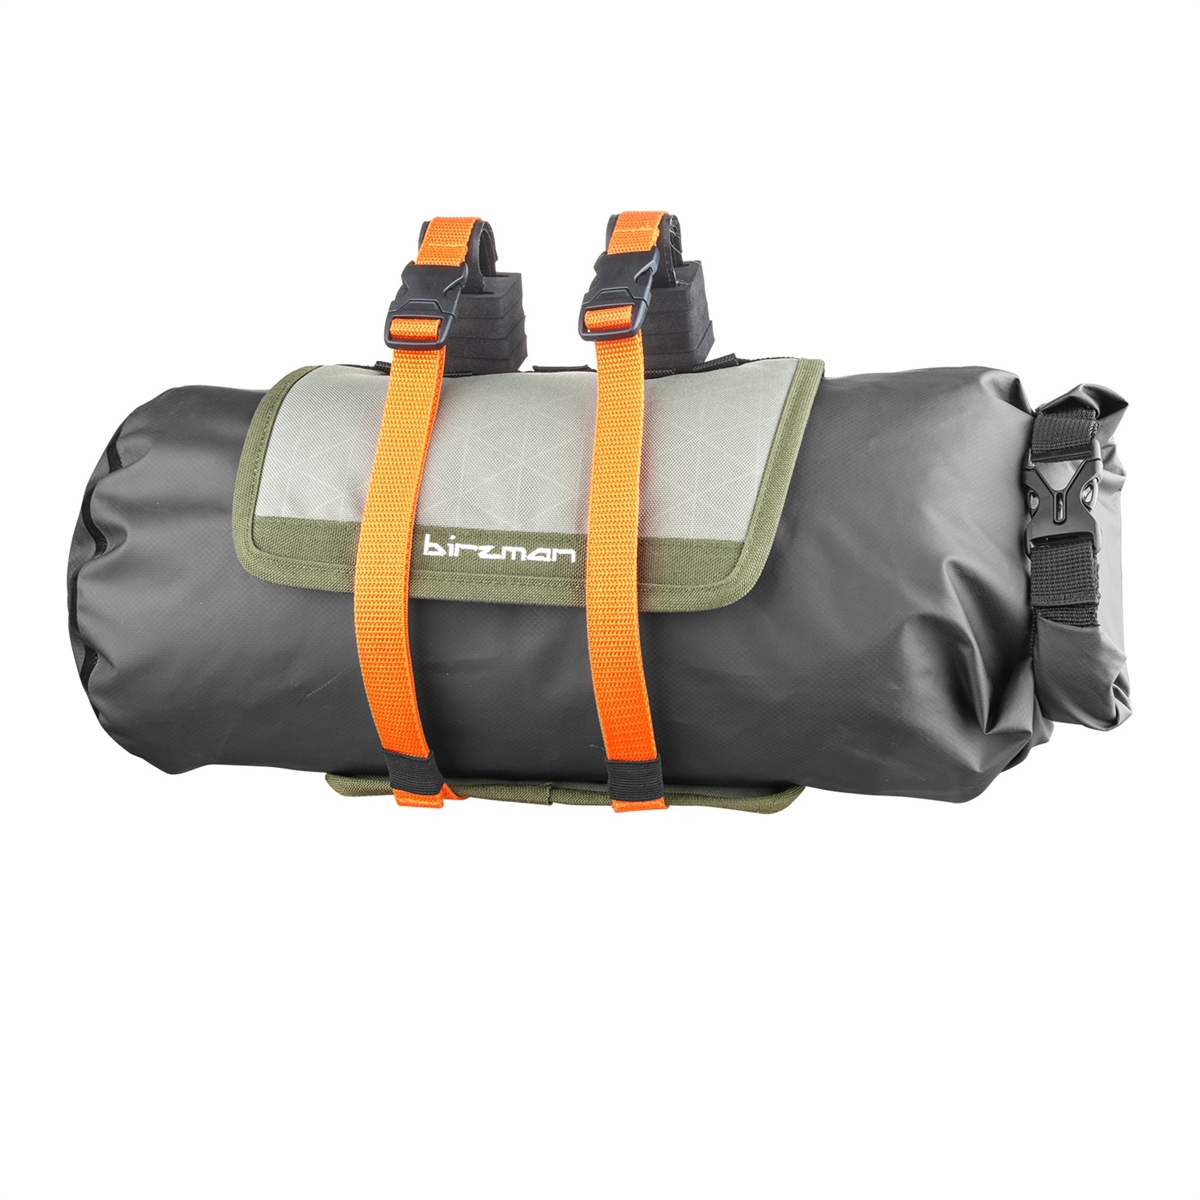 Packman handlebar pack bag 9,5lt green